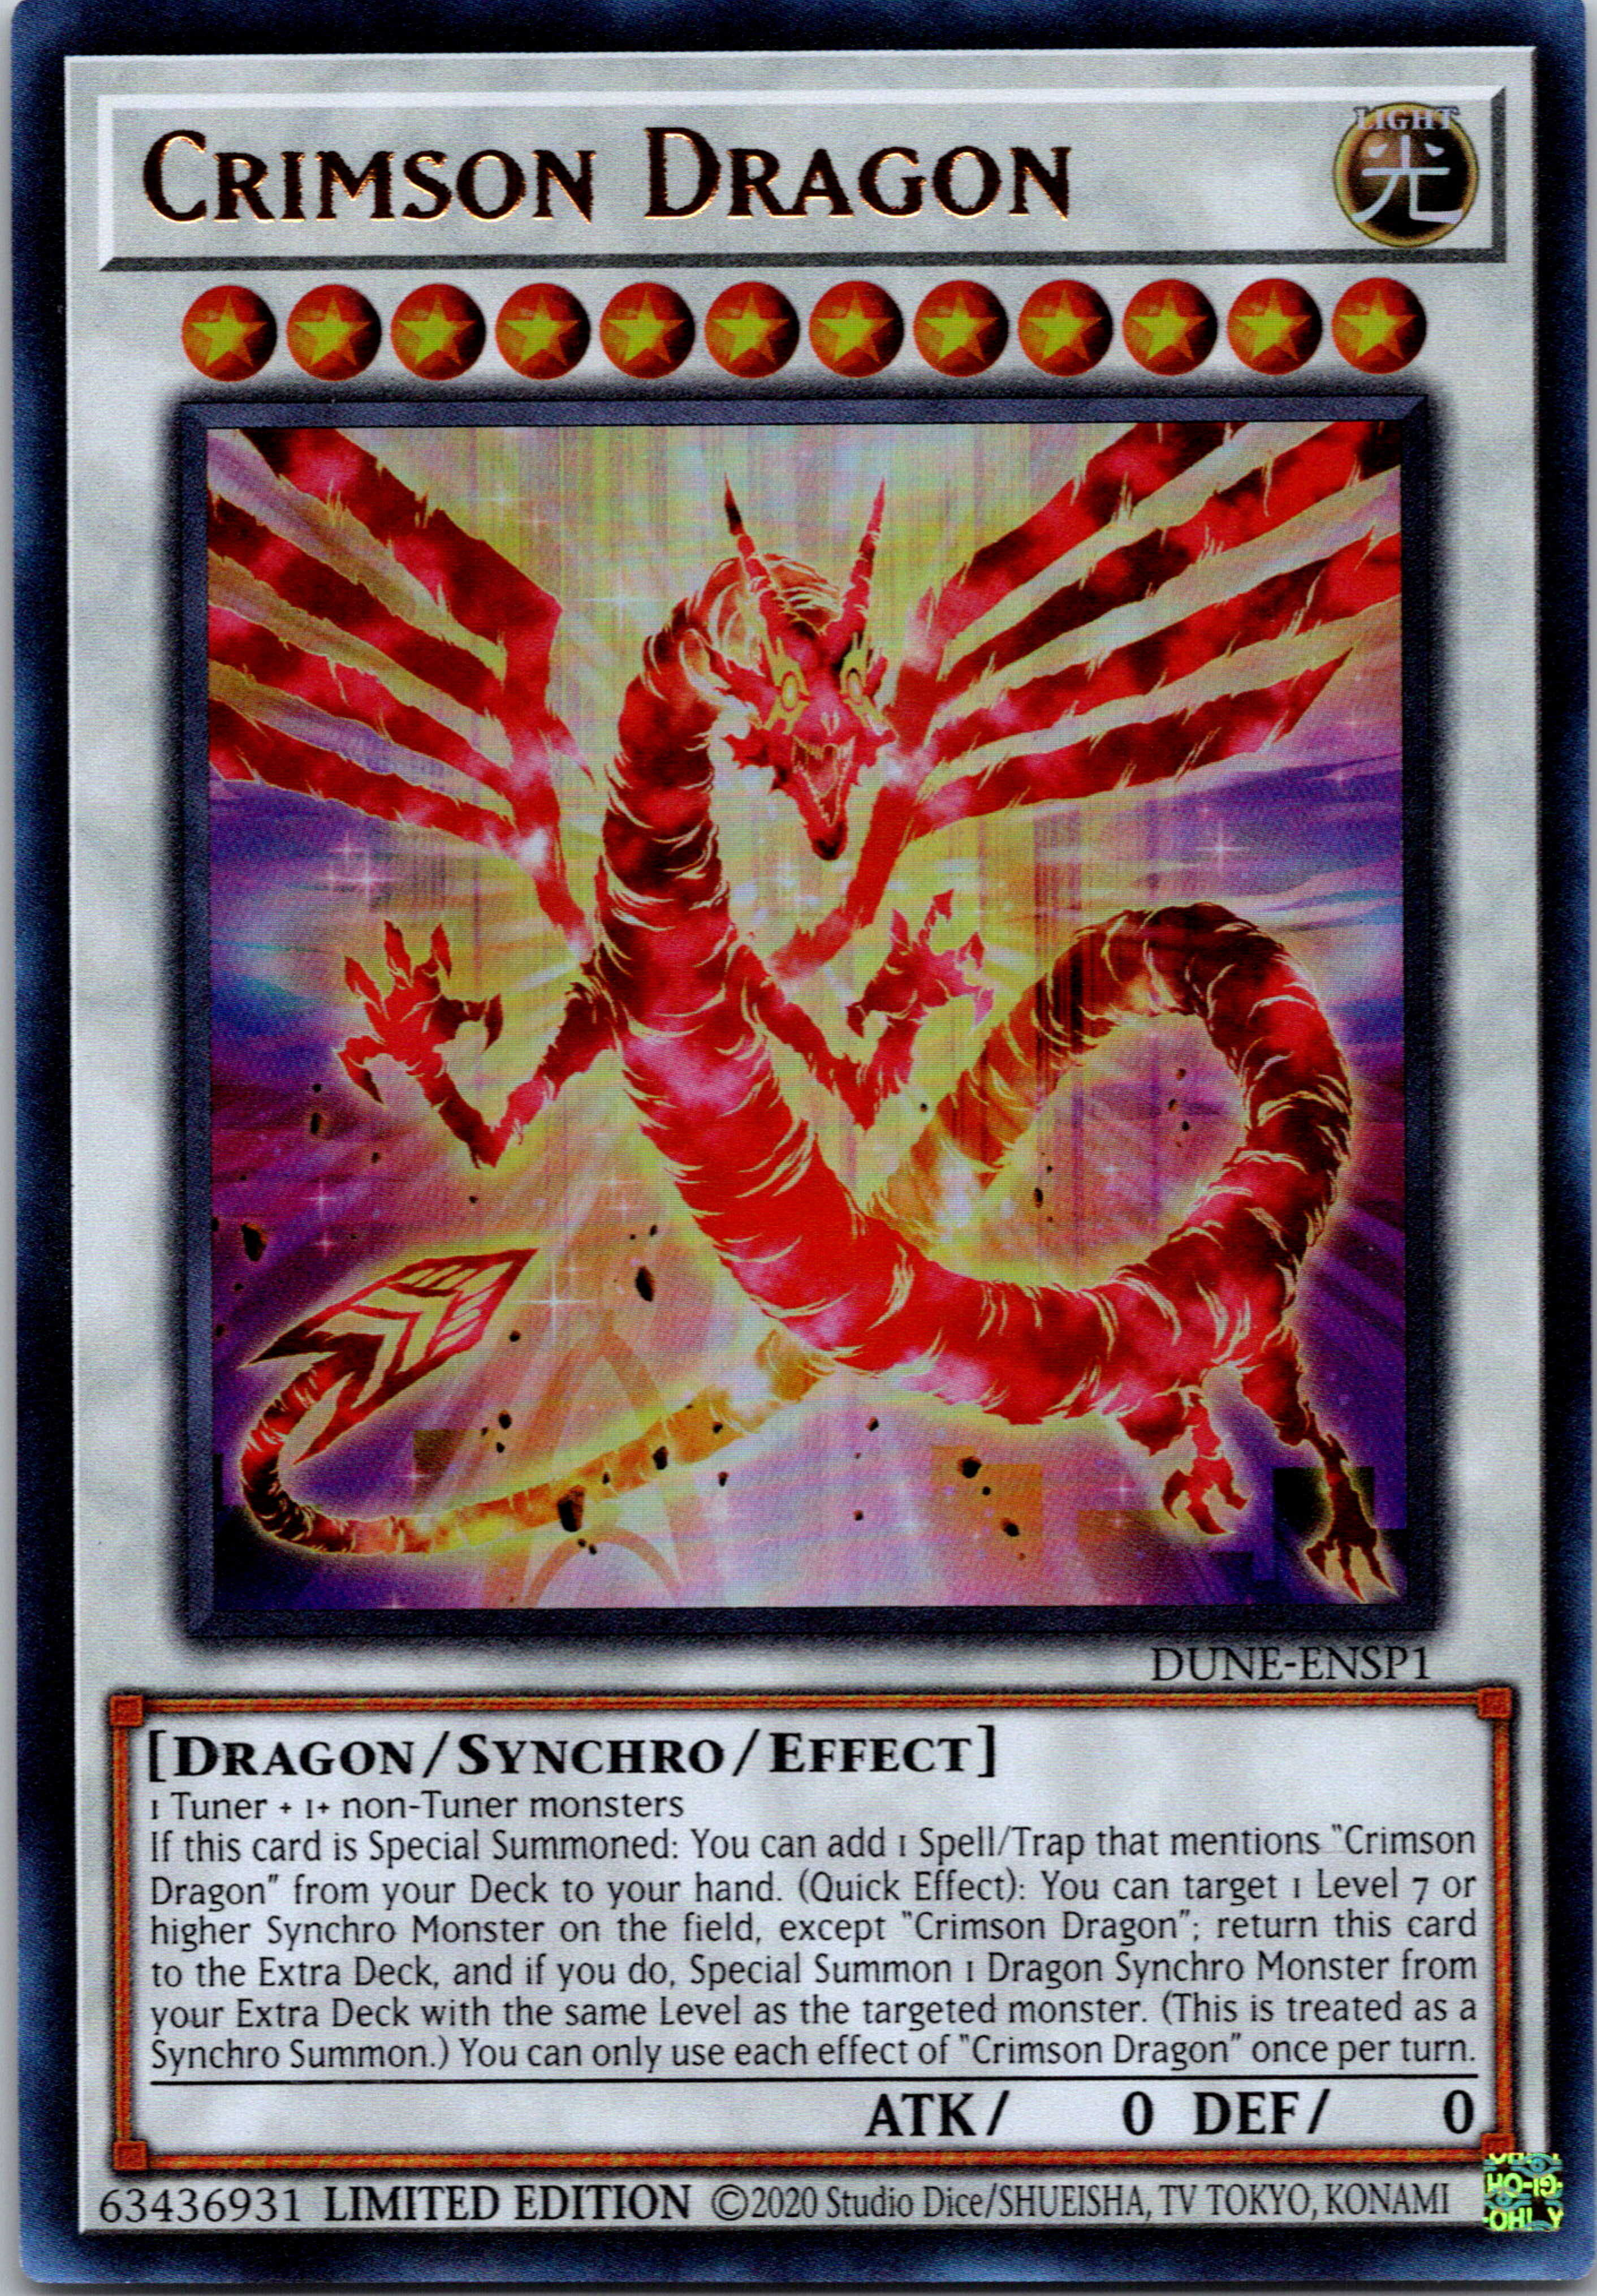 Crimson Dragon [DUNE-ENSP1] - (Ultra Rare) Limited